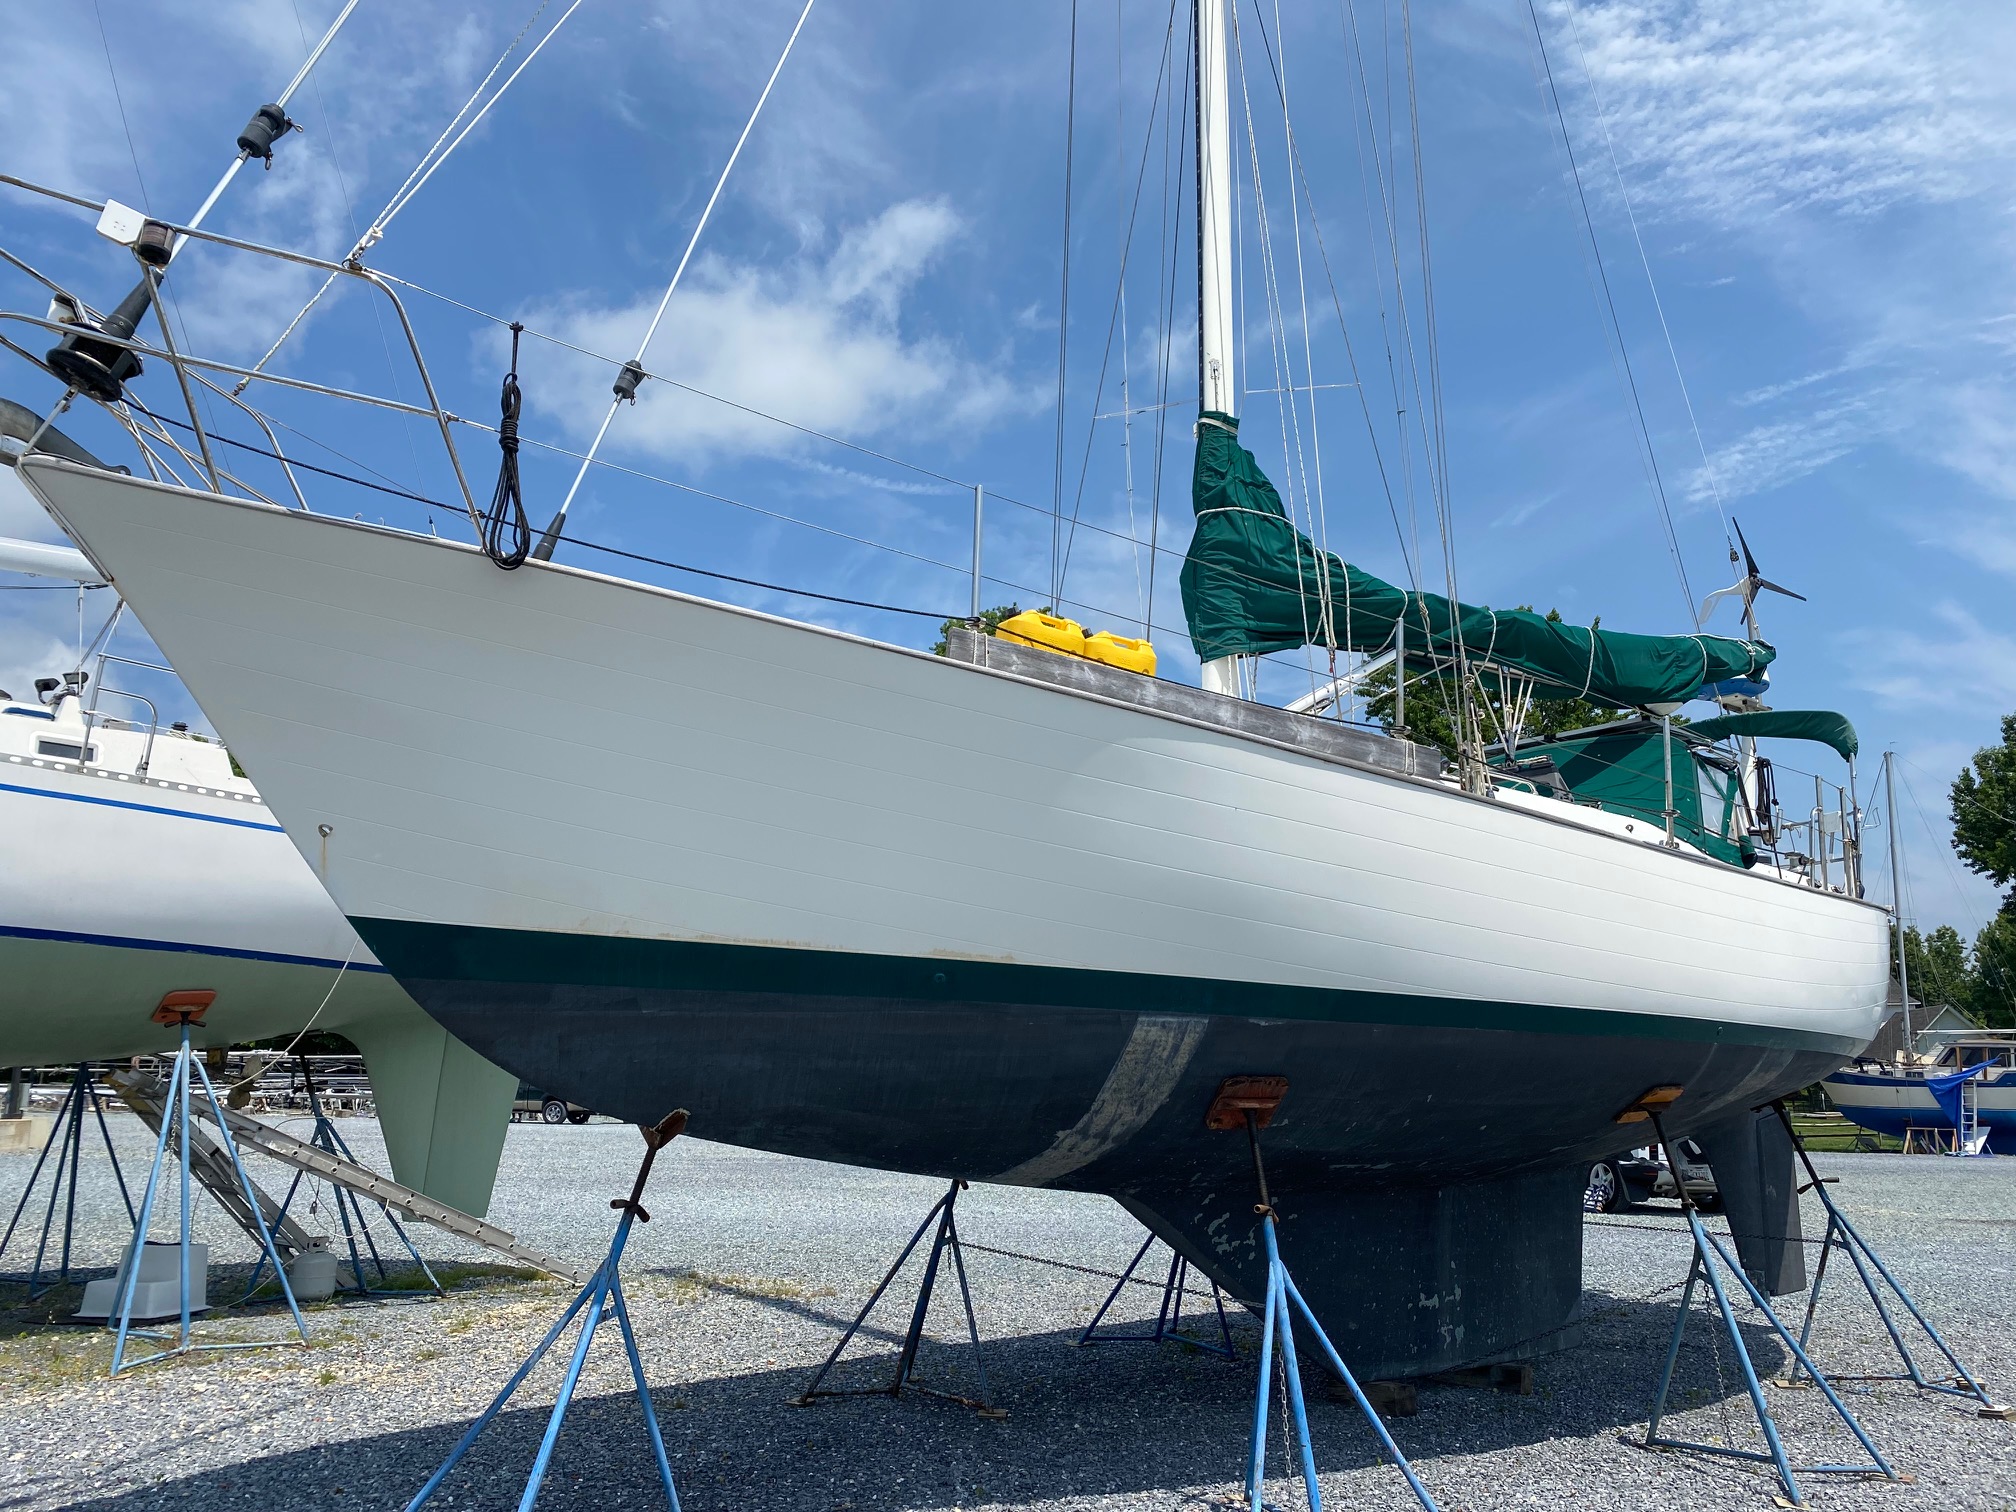 Atlantic Yacht Brokers of Annapolis